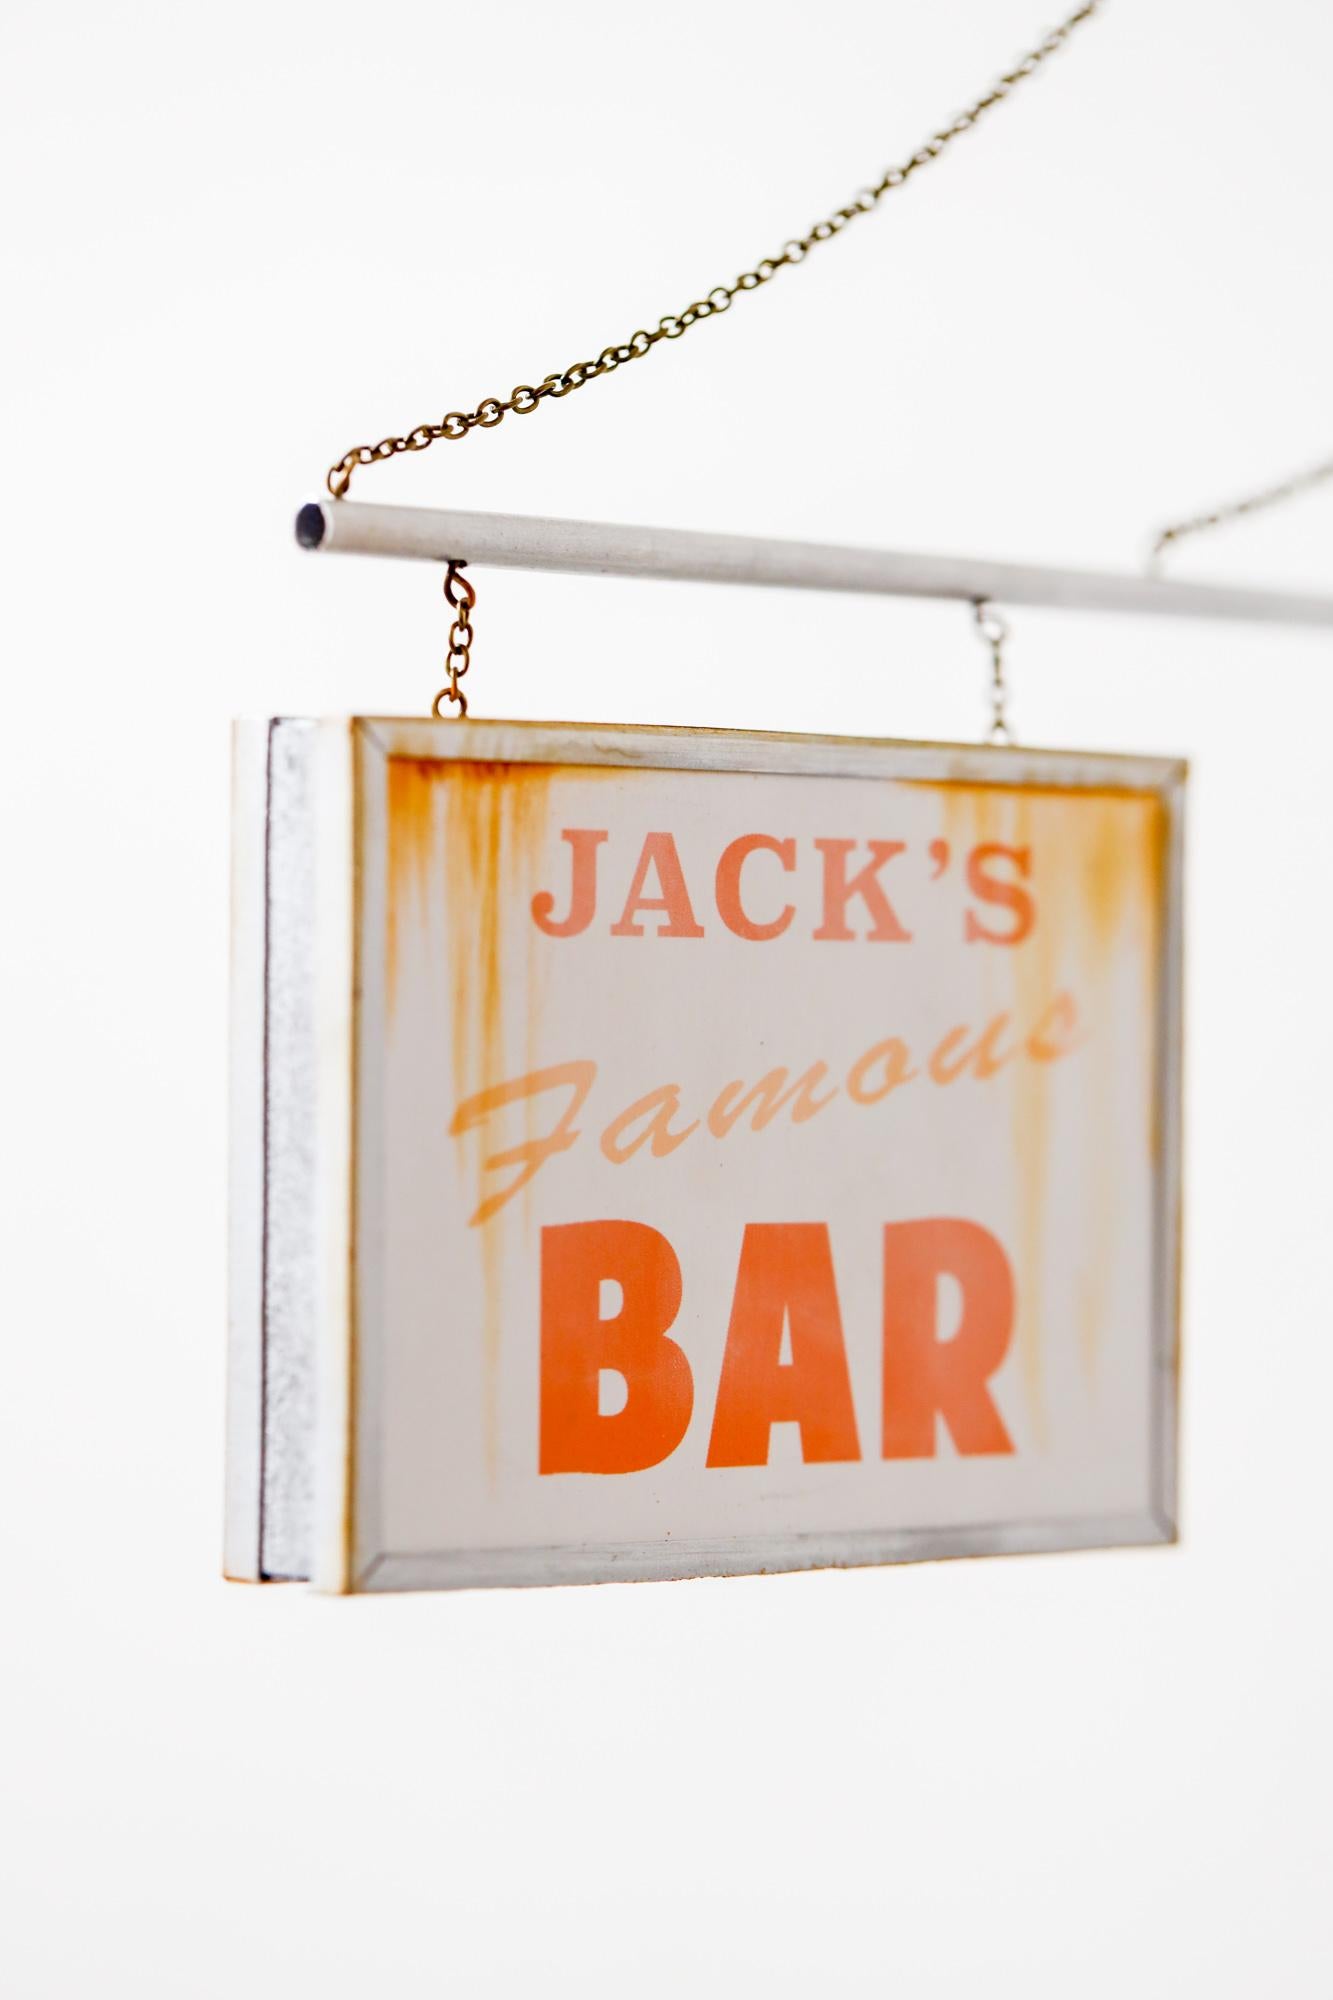 jack's famous bar photos